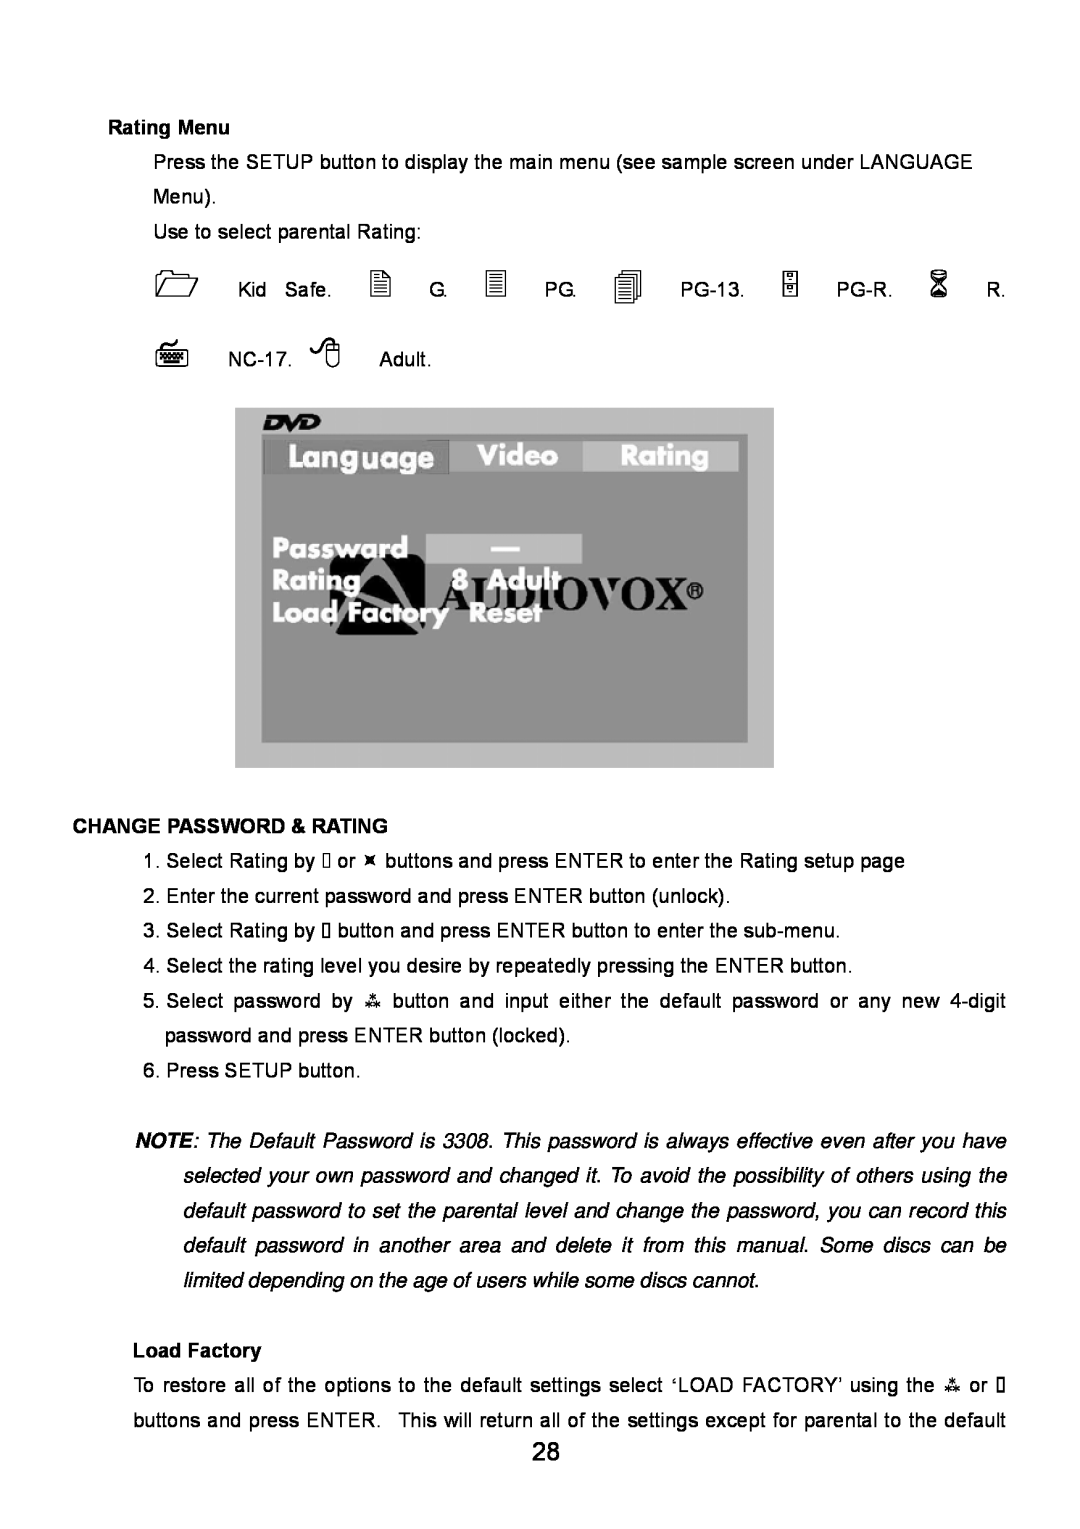 Audiovox VE720 manual Rating Menu, Change Password & Rating, Load Factory 